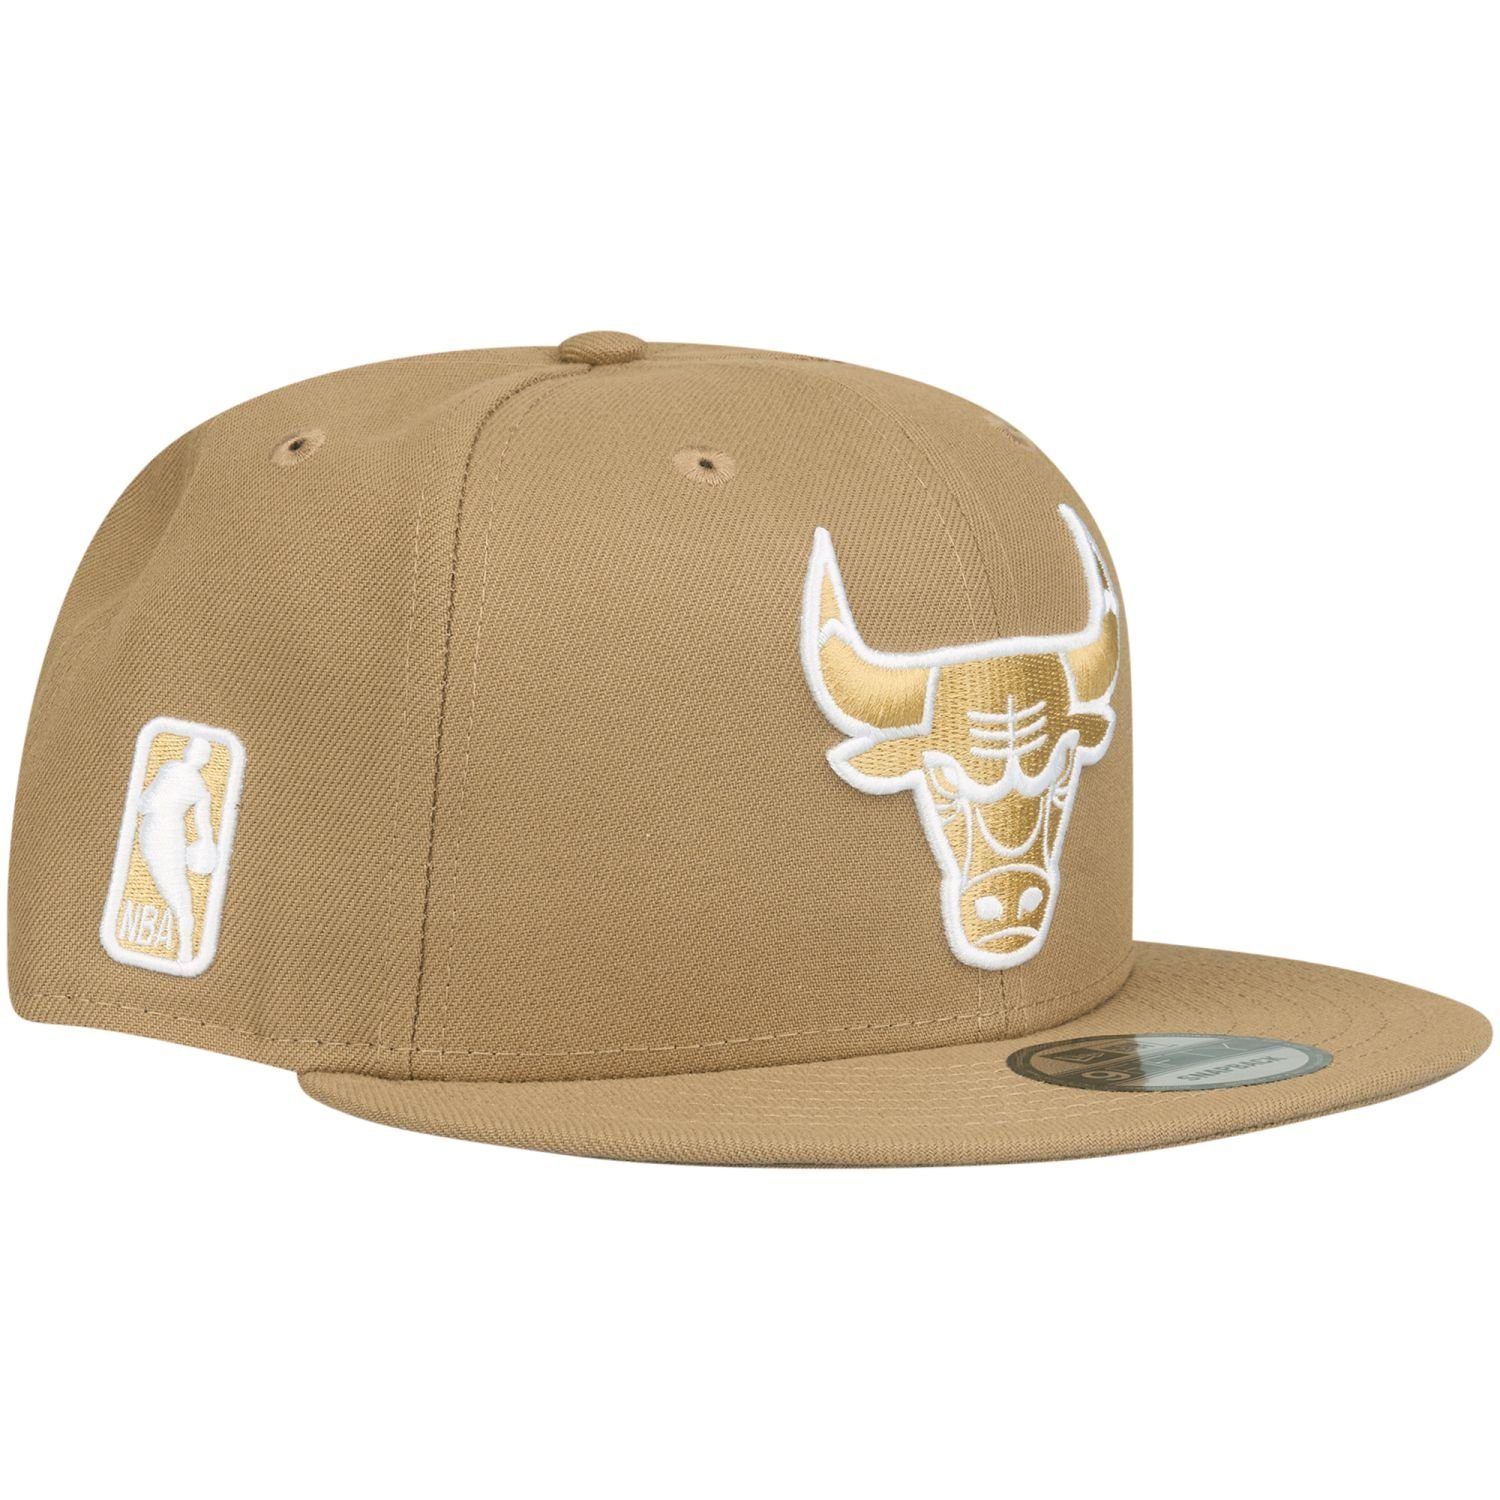 New Era Snapback Cap 9Fifty Bulls Chicago